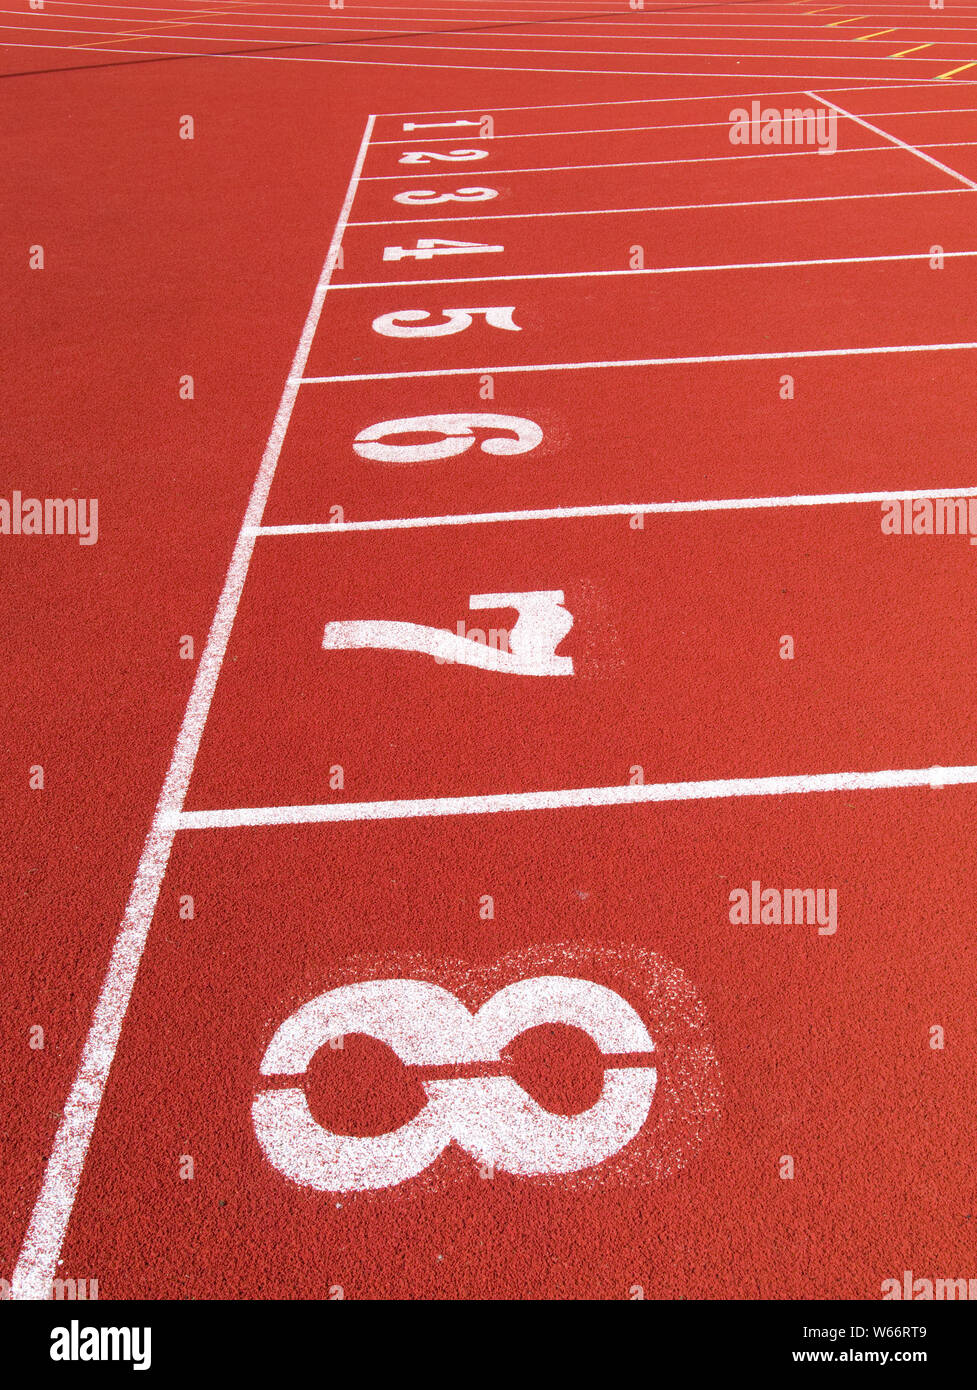 Start grid on athletics track Stock Photo